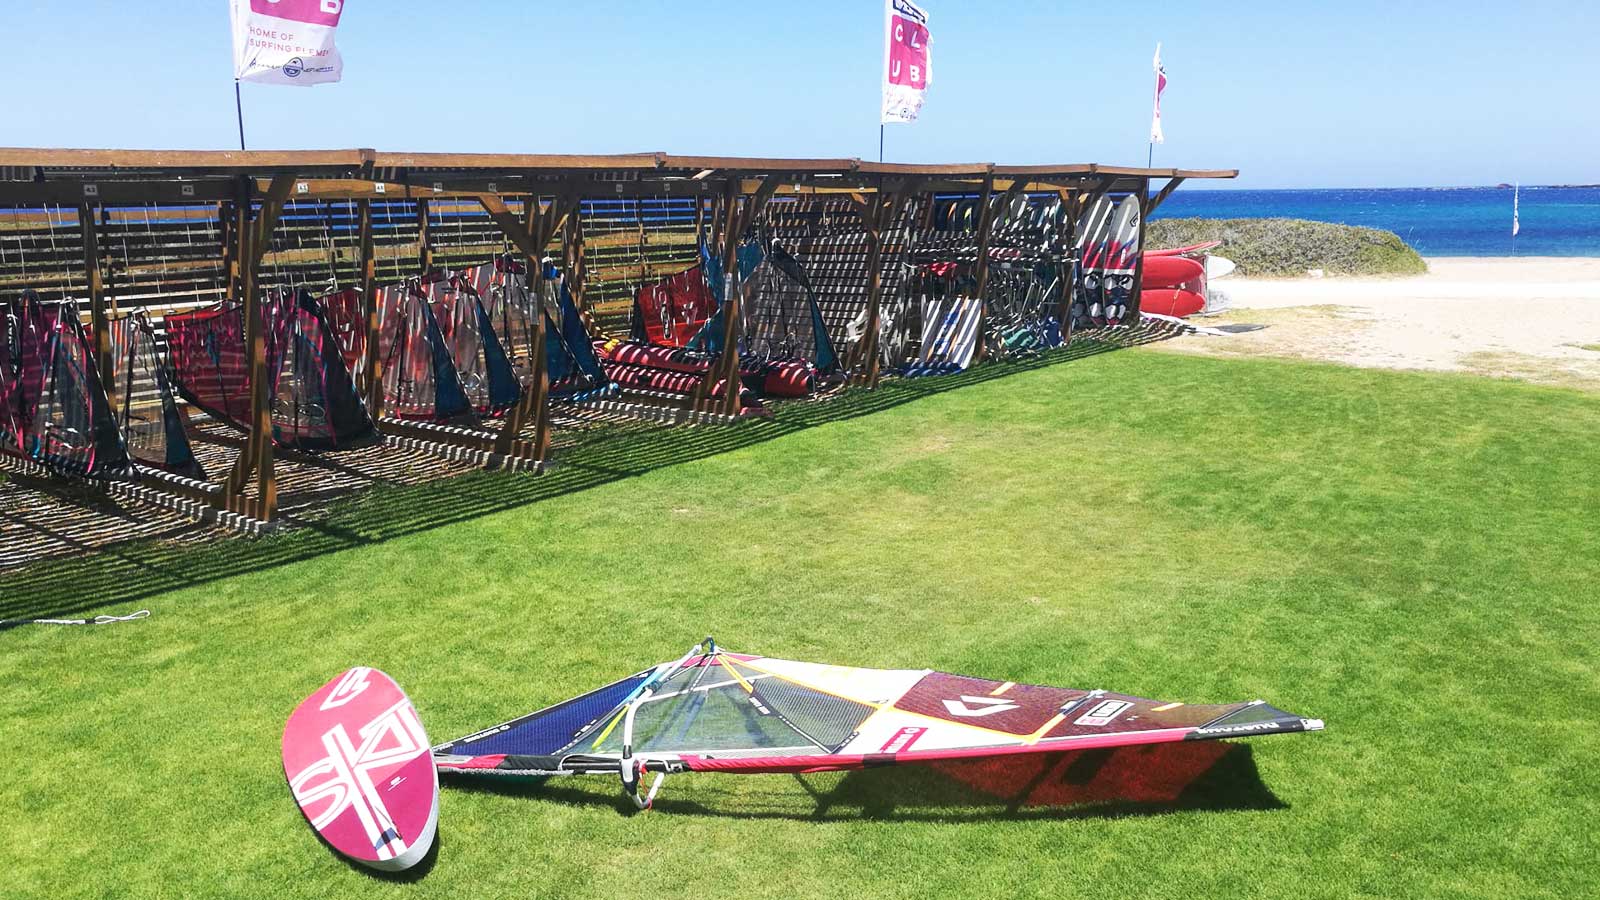 ion club karpathos with windsurf gear on the ground